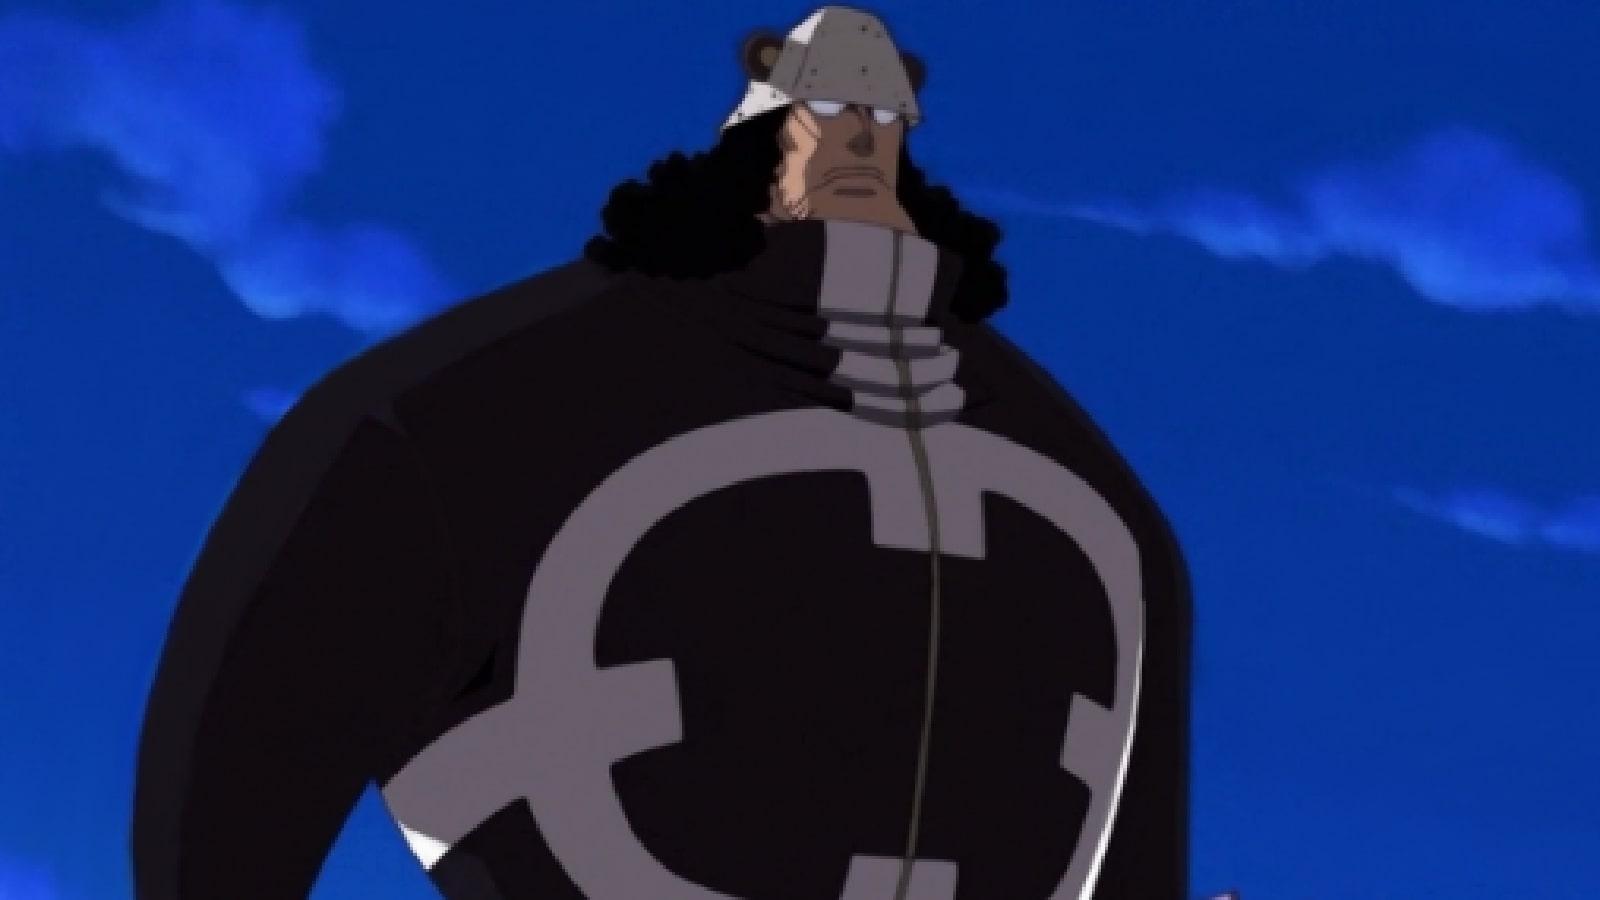 One Piece's Kuma as a warlord